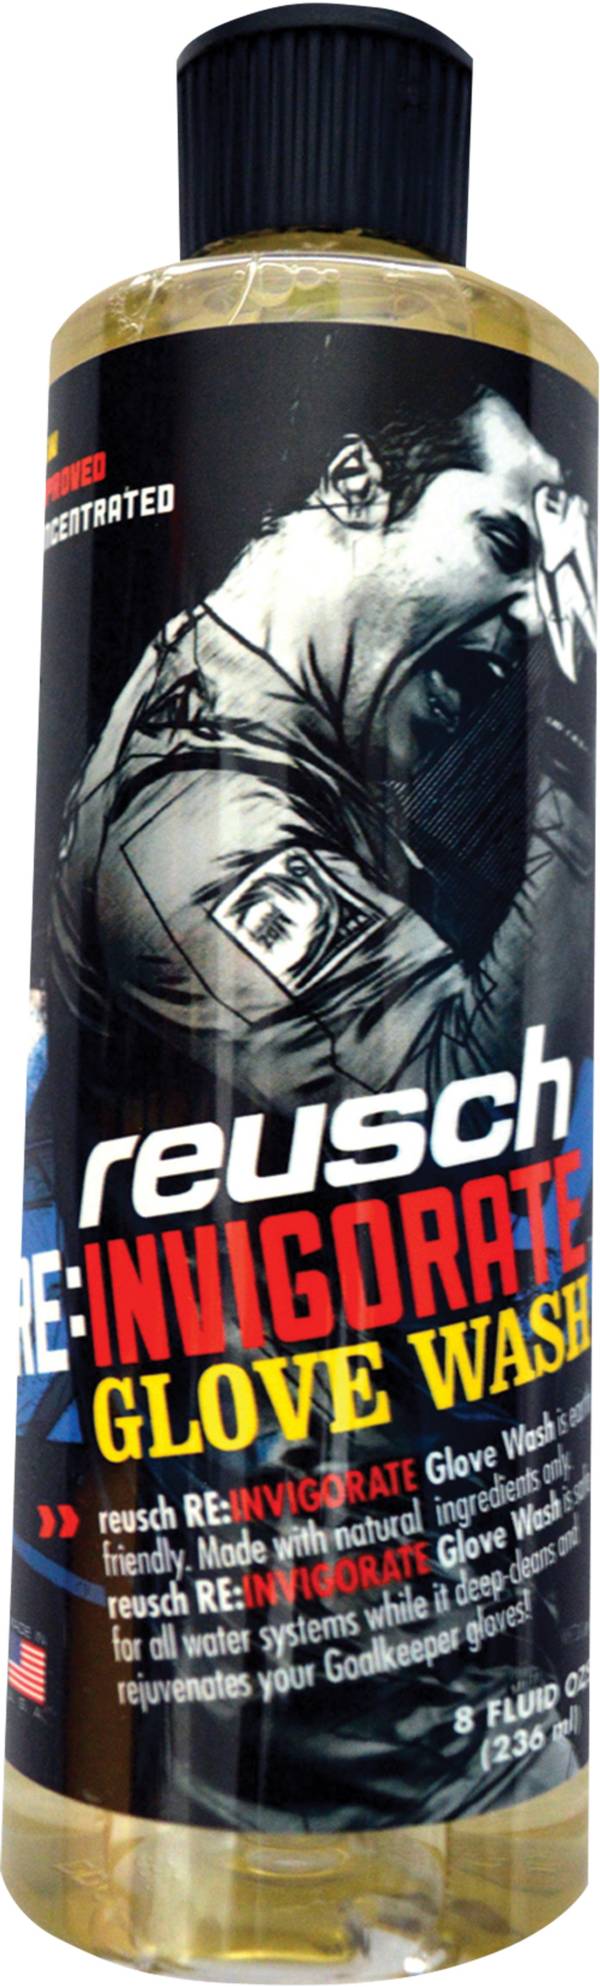 Reusch Re:Invigorate Goalkeeper Glove Wash product image